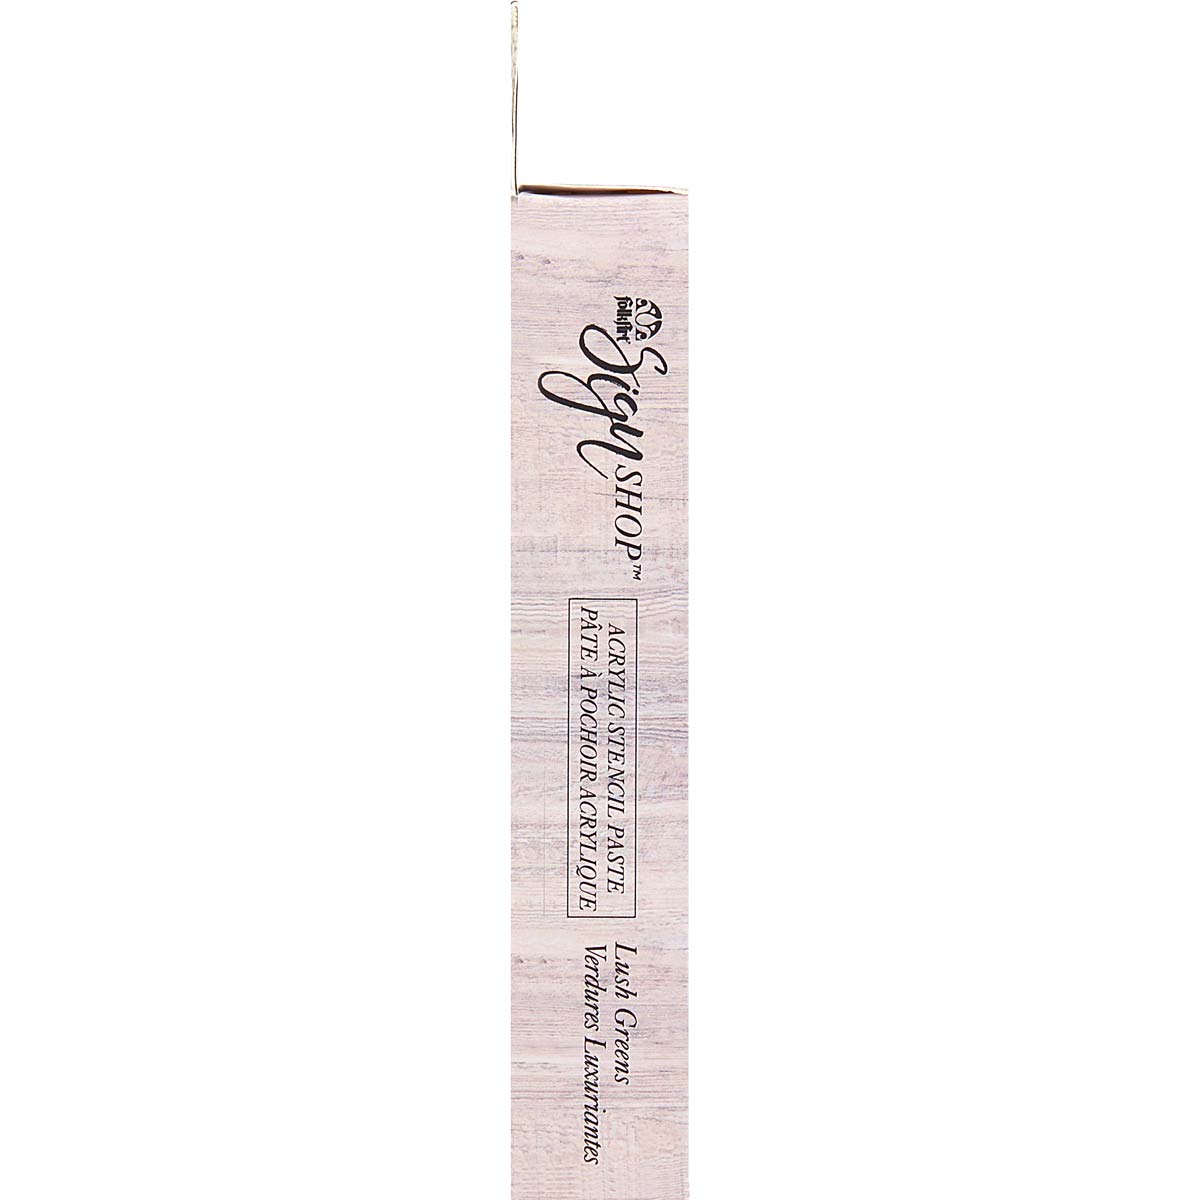 FolkArt ® Sign Shop™ Acrylic Stencil Paste Set - Lush Greens, 6 pc. - 11976